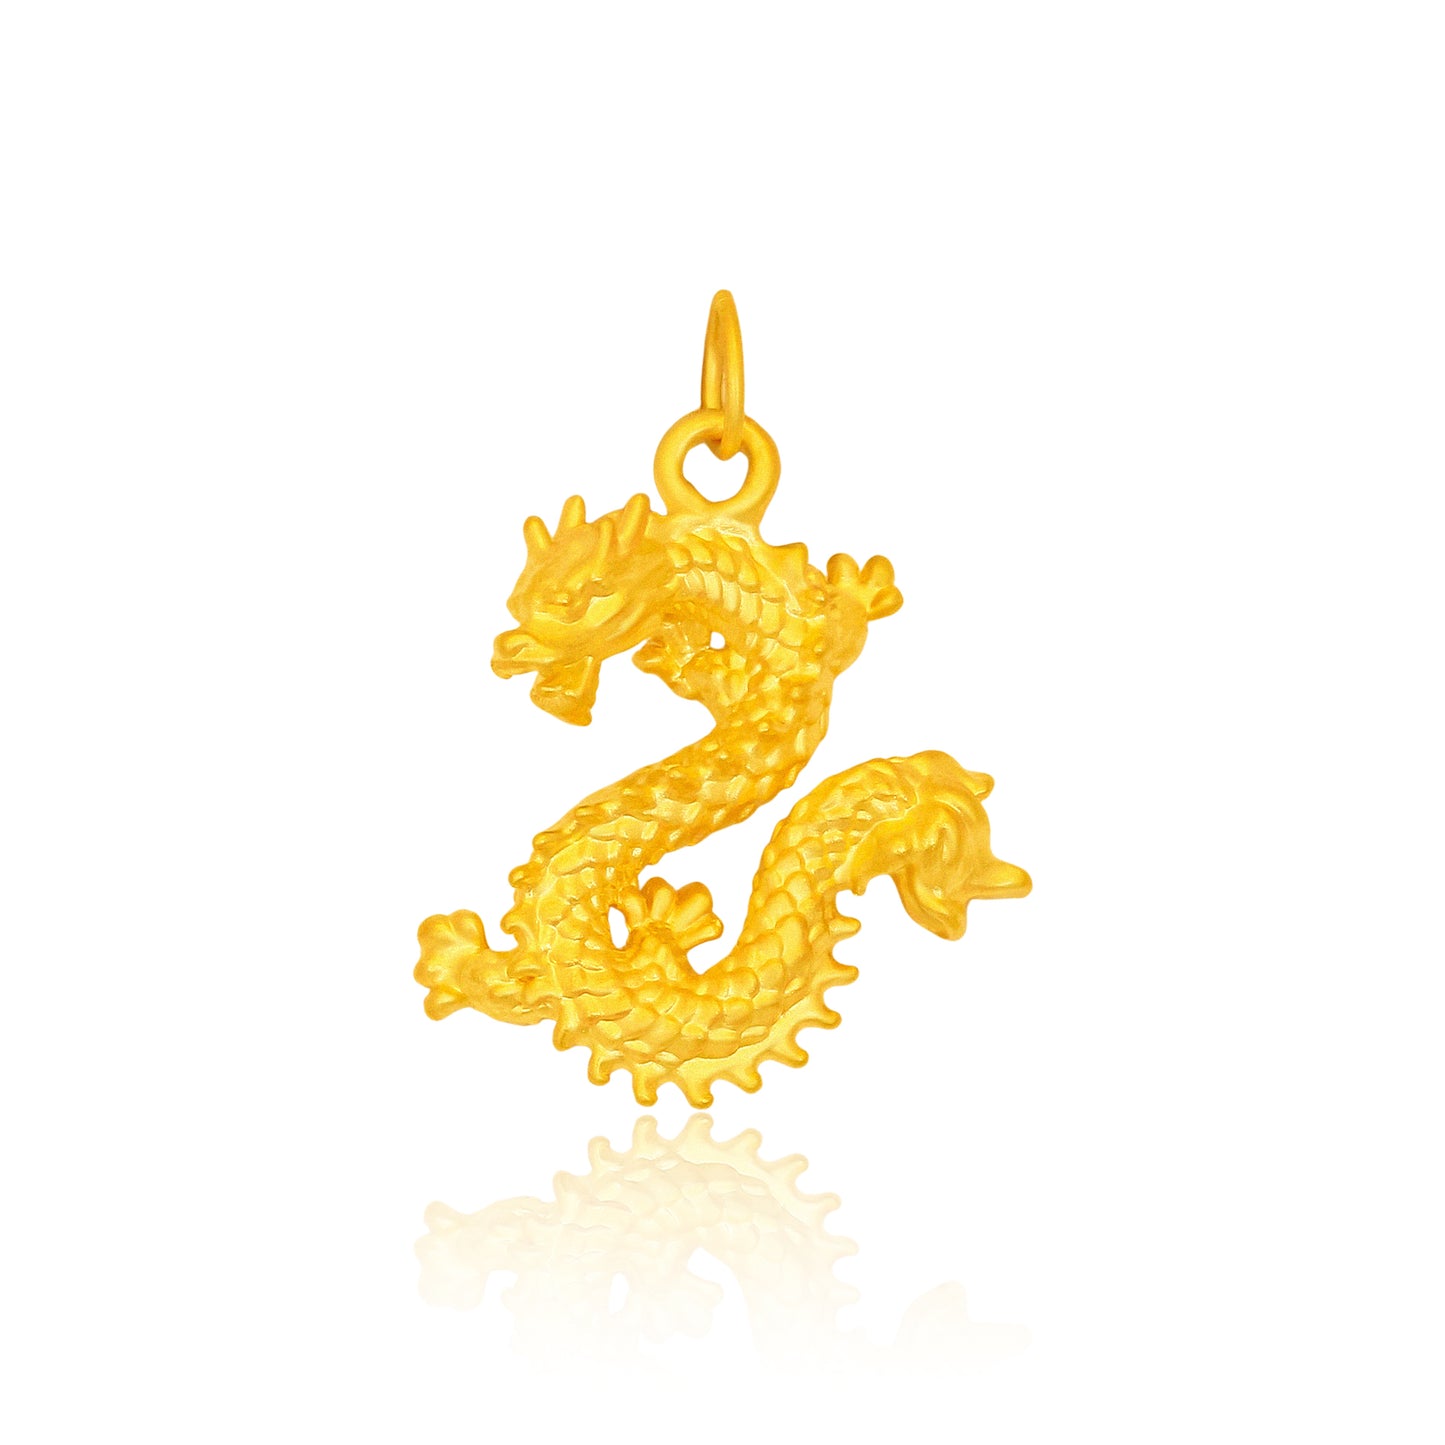 TAKA Jewellery 999 Pure Gold Pendant Dragon